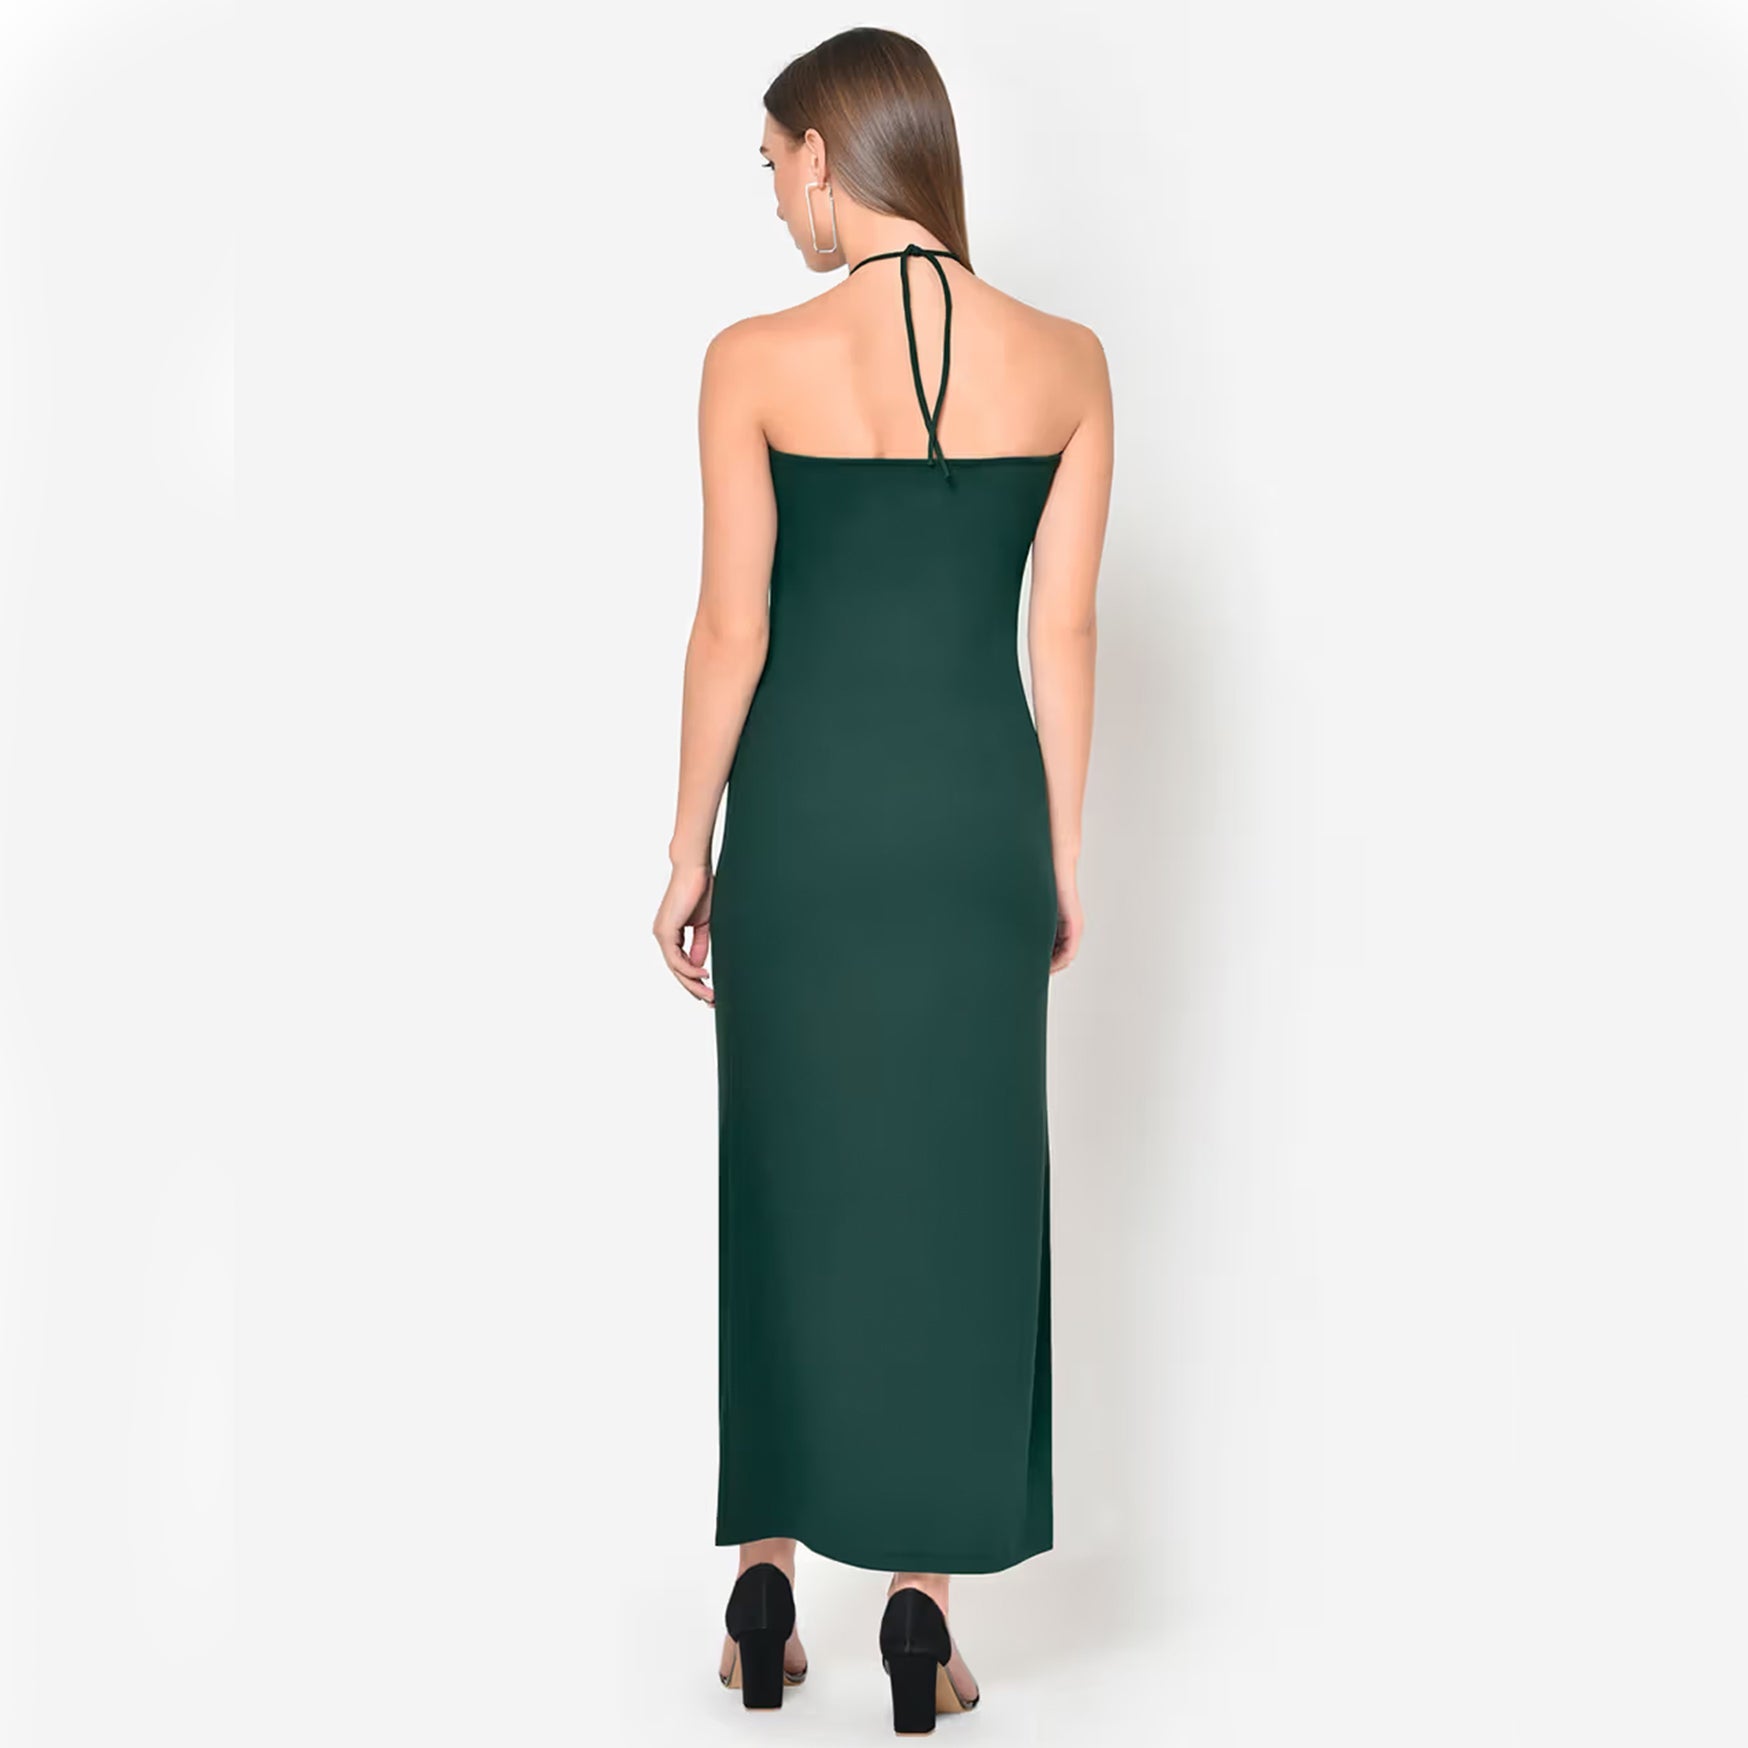 Turquoise Detailing Dress (M)